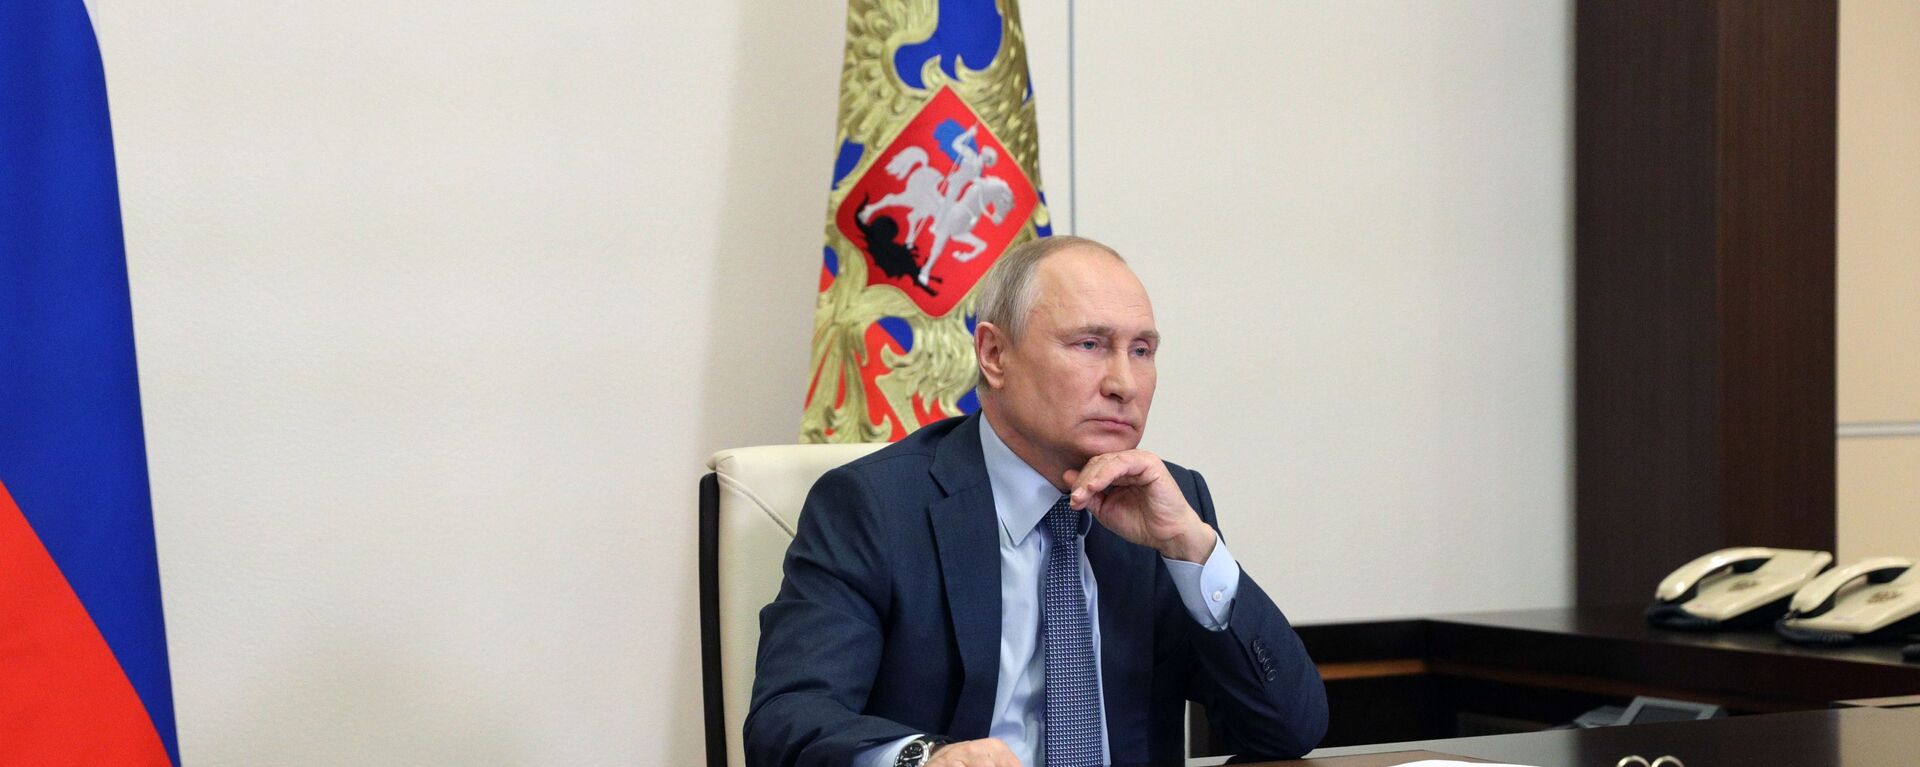 Tổng thống Nga Vladimir Putin. - Sputnik Việt Nam, 1920, 06.10.2021